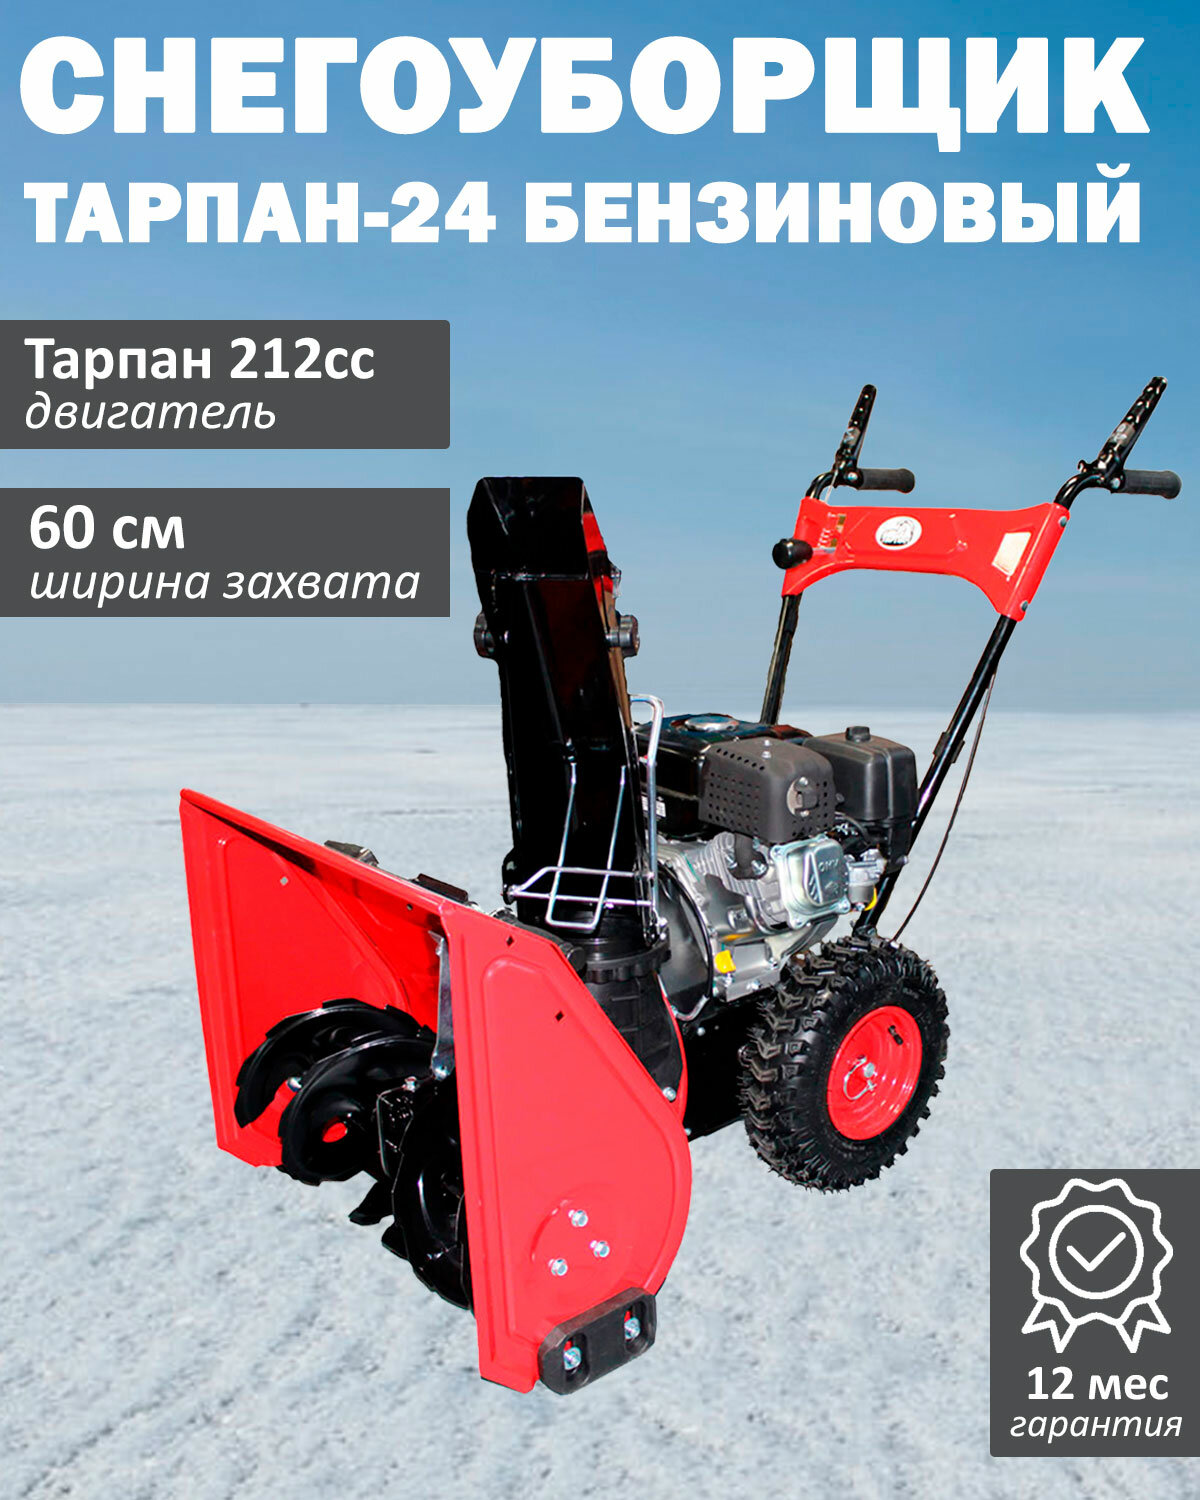 Снегоуборщик Тарпан-24, двигатель Тарпан 212cc, мощность 7 л. с, ширина захвата 60 см